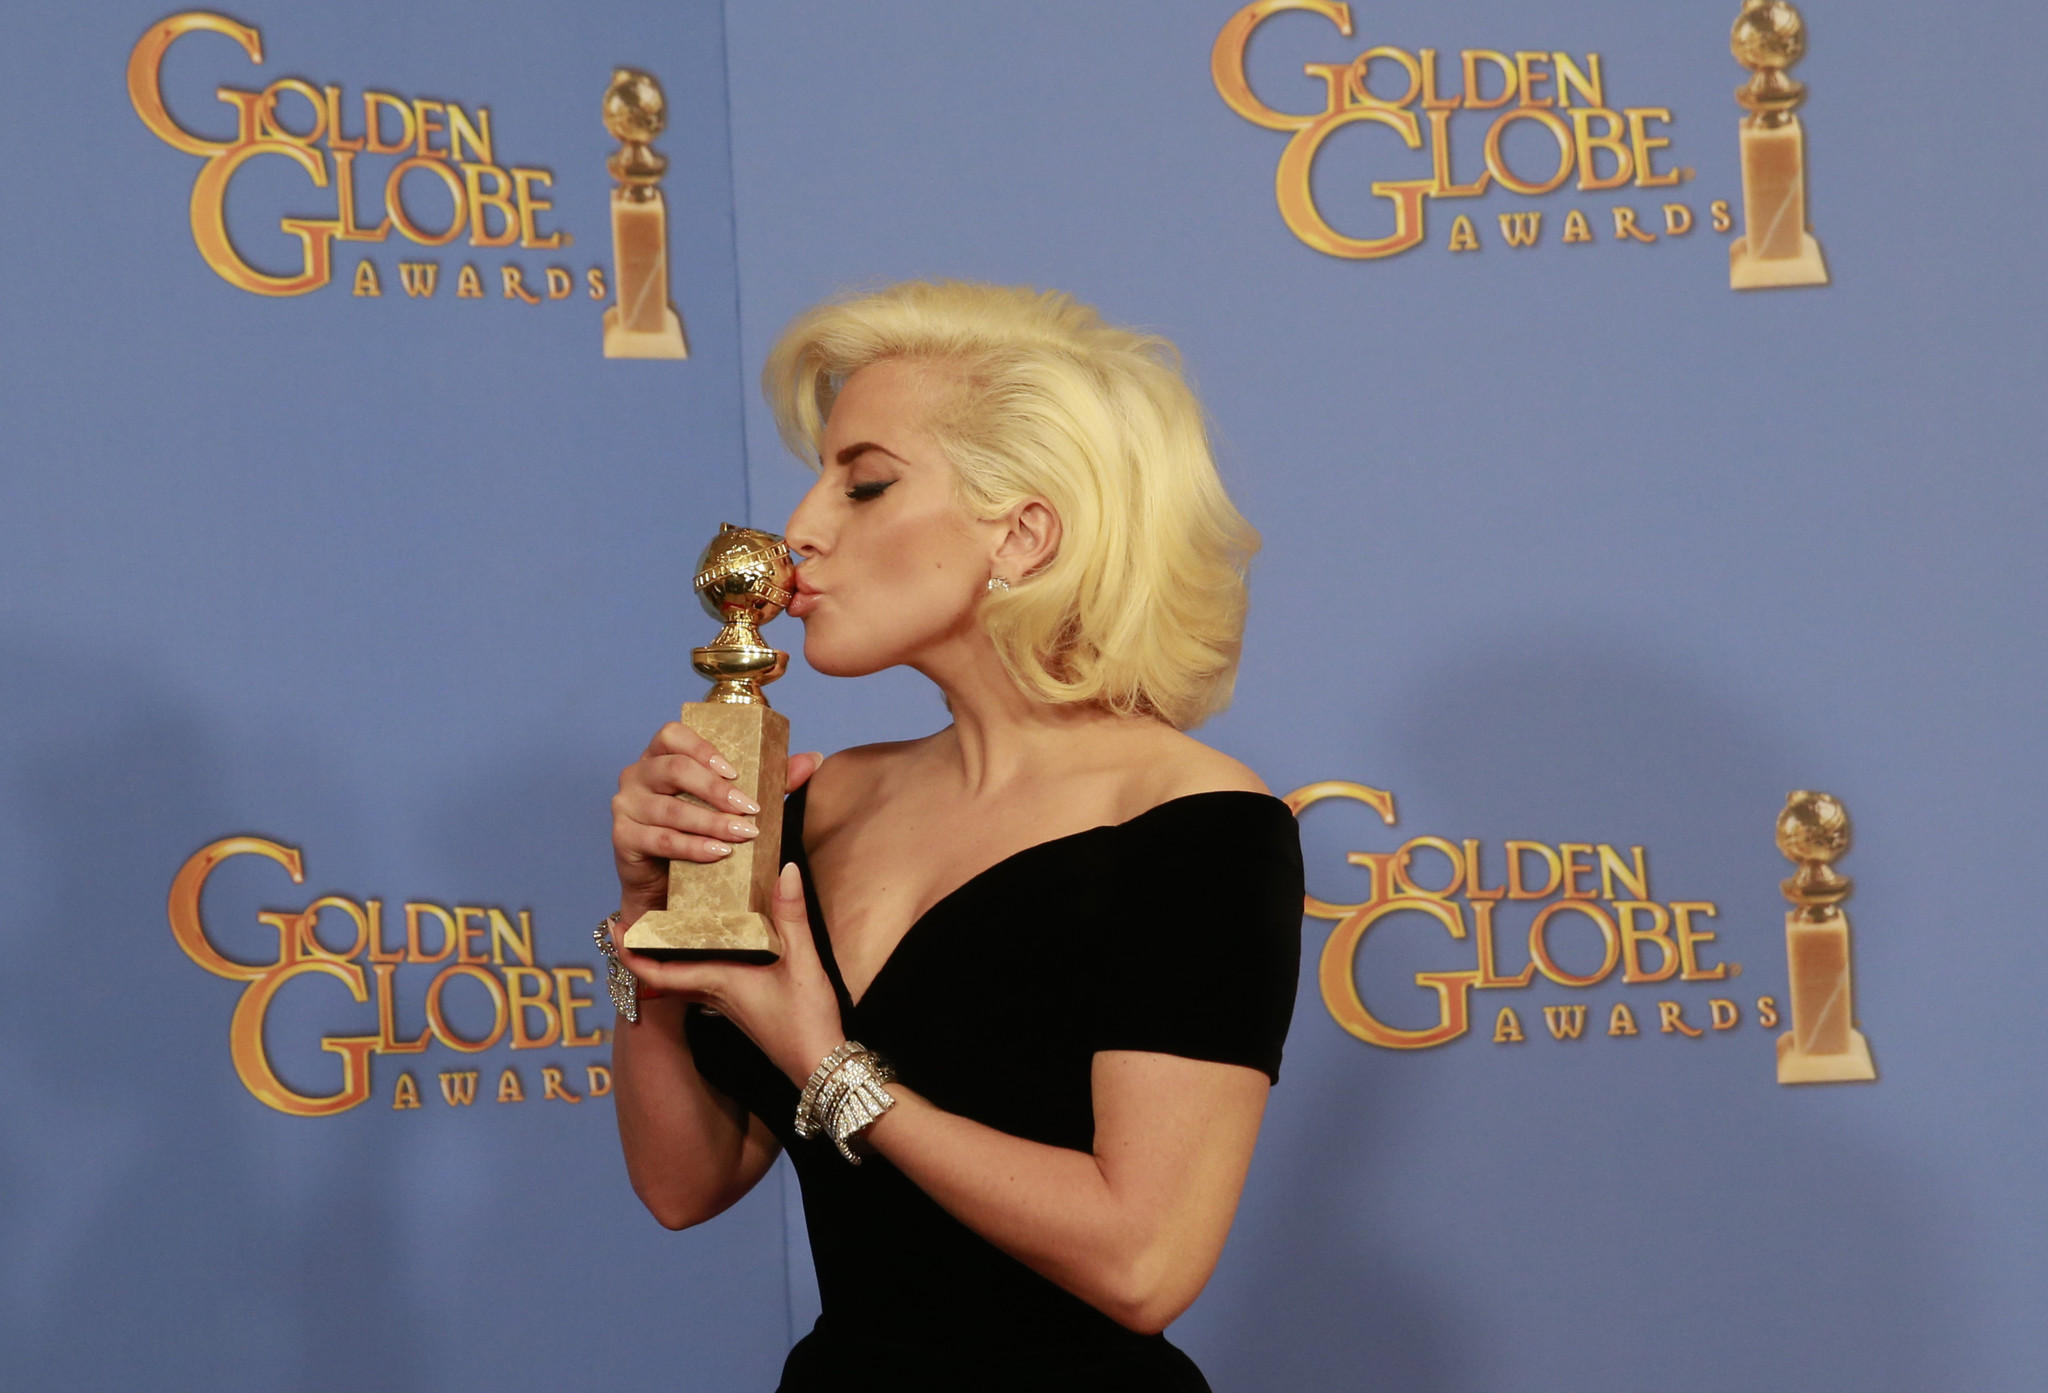 Golden Globes 2016: Complete list of nominees - LA Times